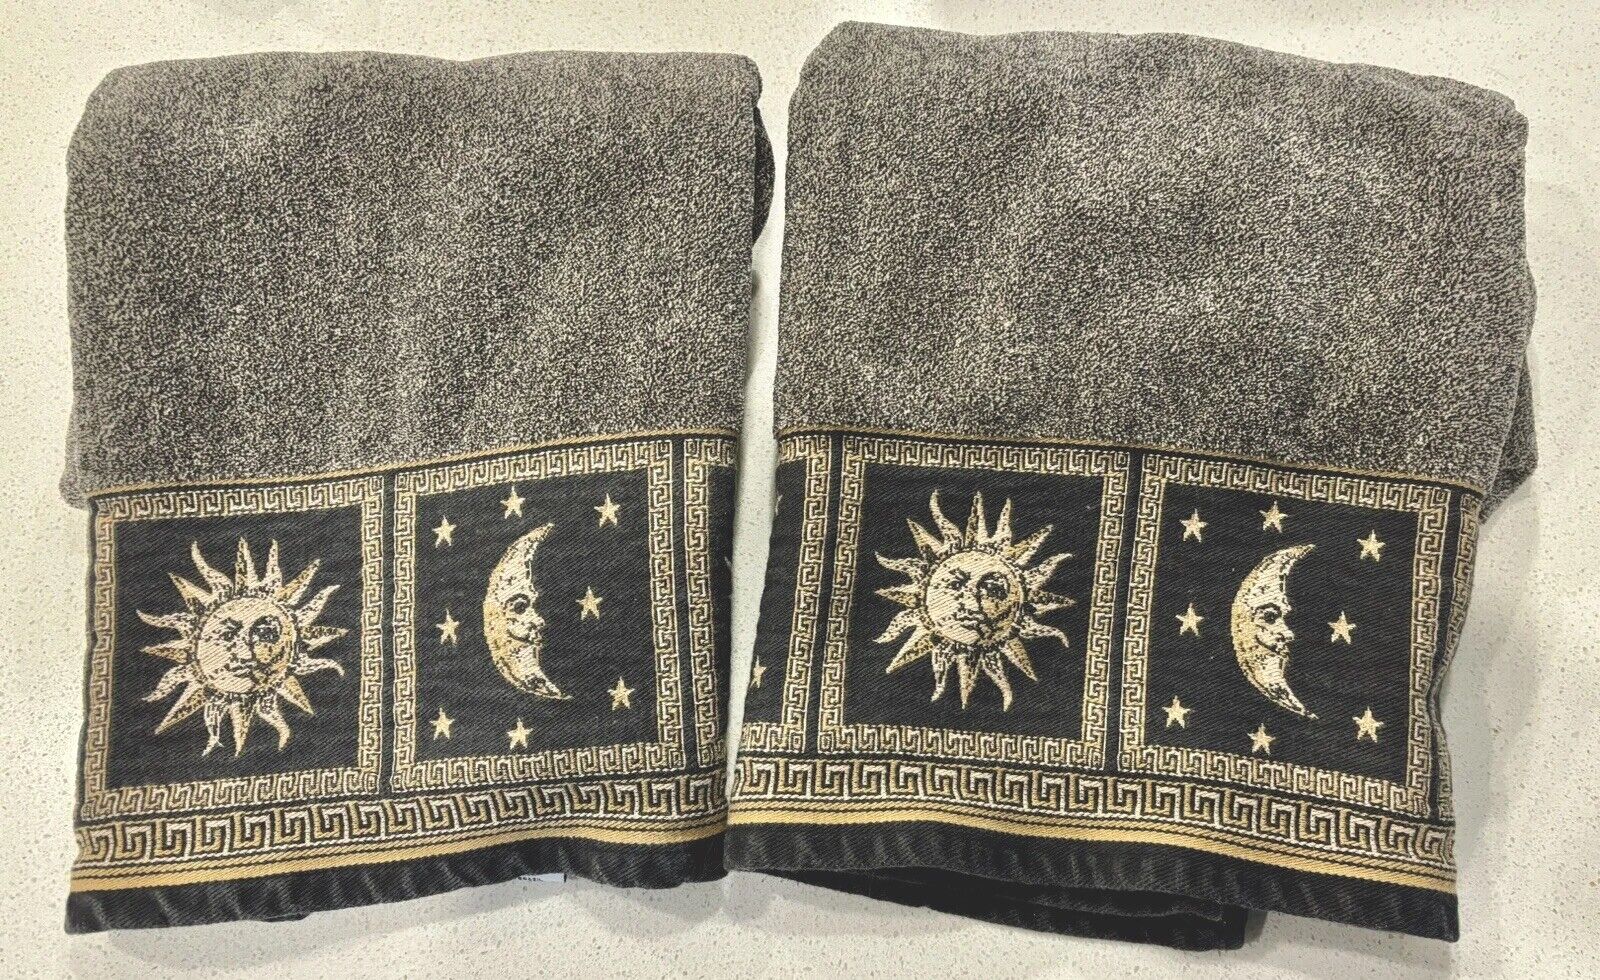 Two VTG Sun Moon & Stars Celestial Cotton Bath Towels Gray & Gold 1990’s